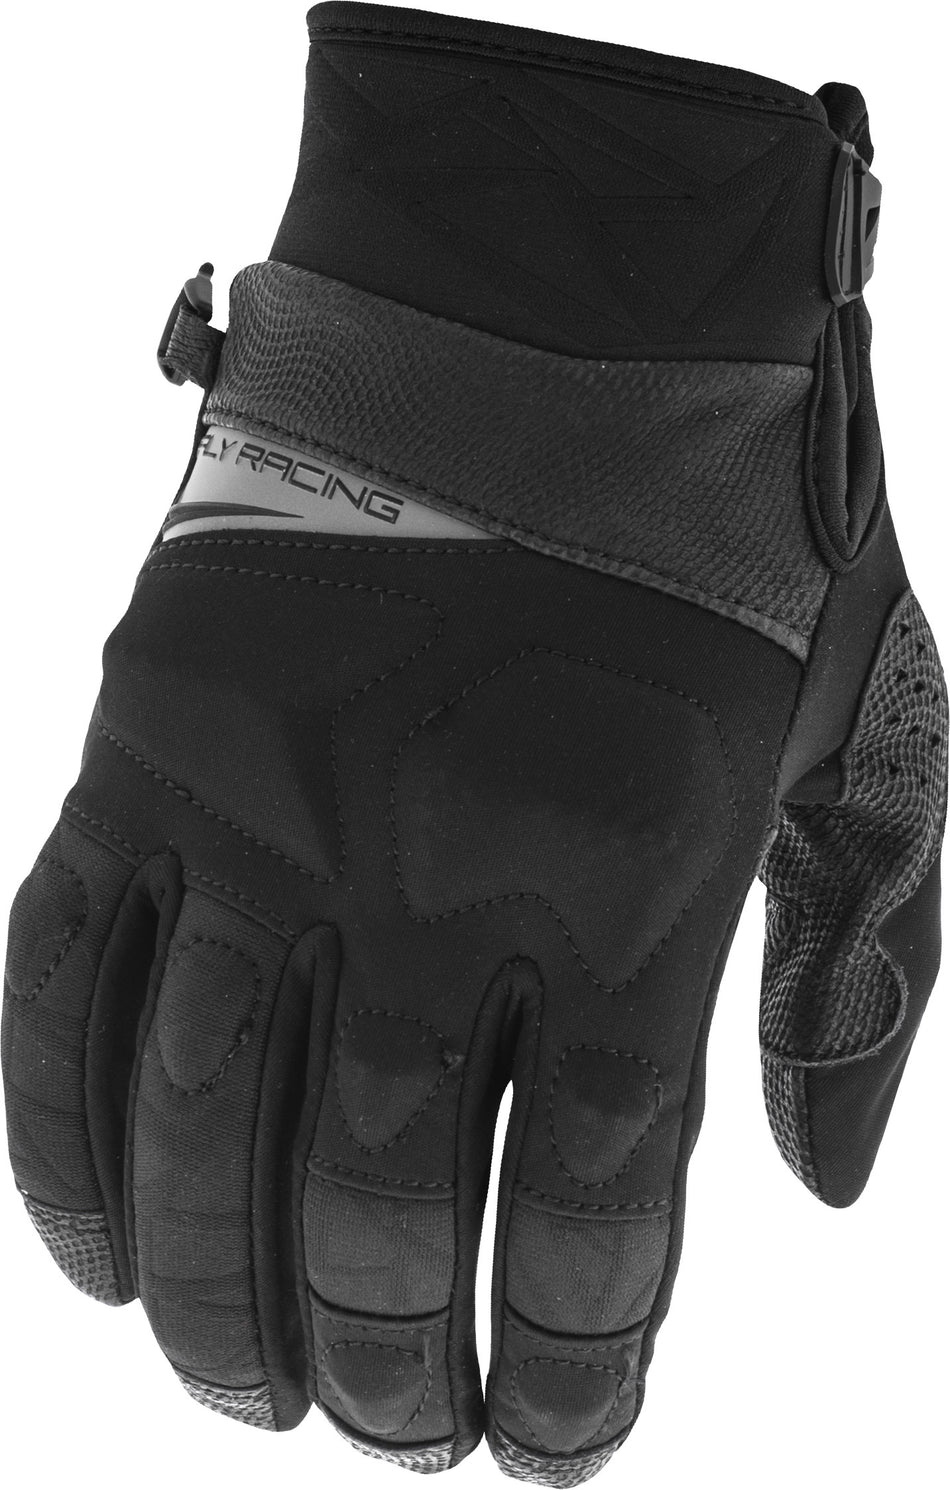 FLY RACING Boundary Gloves Black Sz 11 371-03011